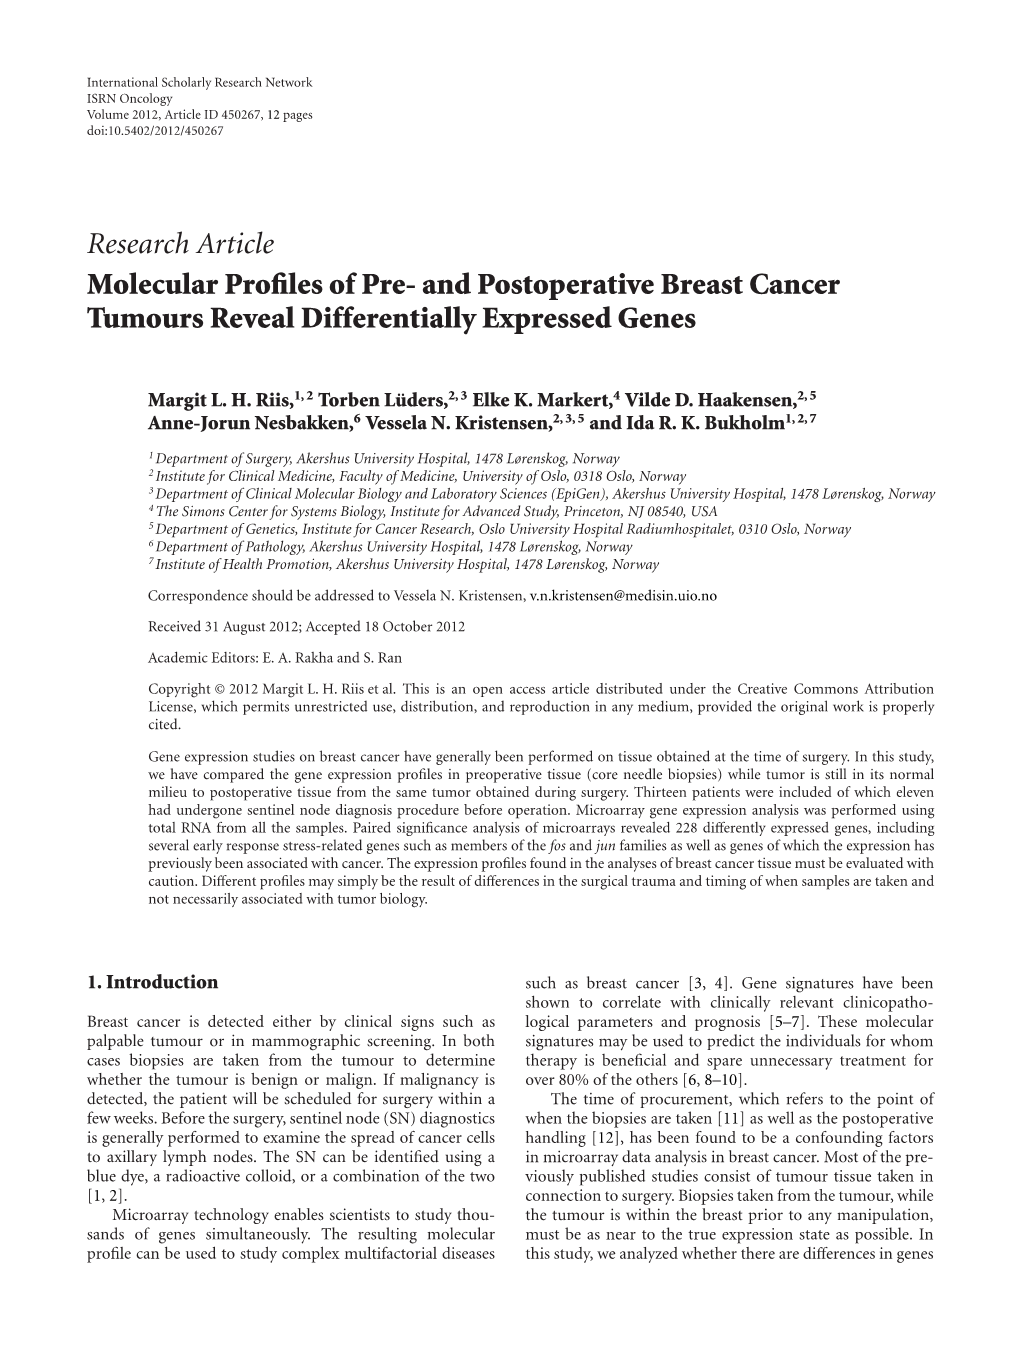 Molecular Profiles of Pre-And Postoperative Breast Cancer